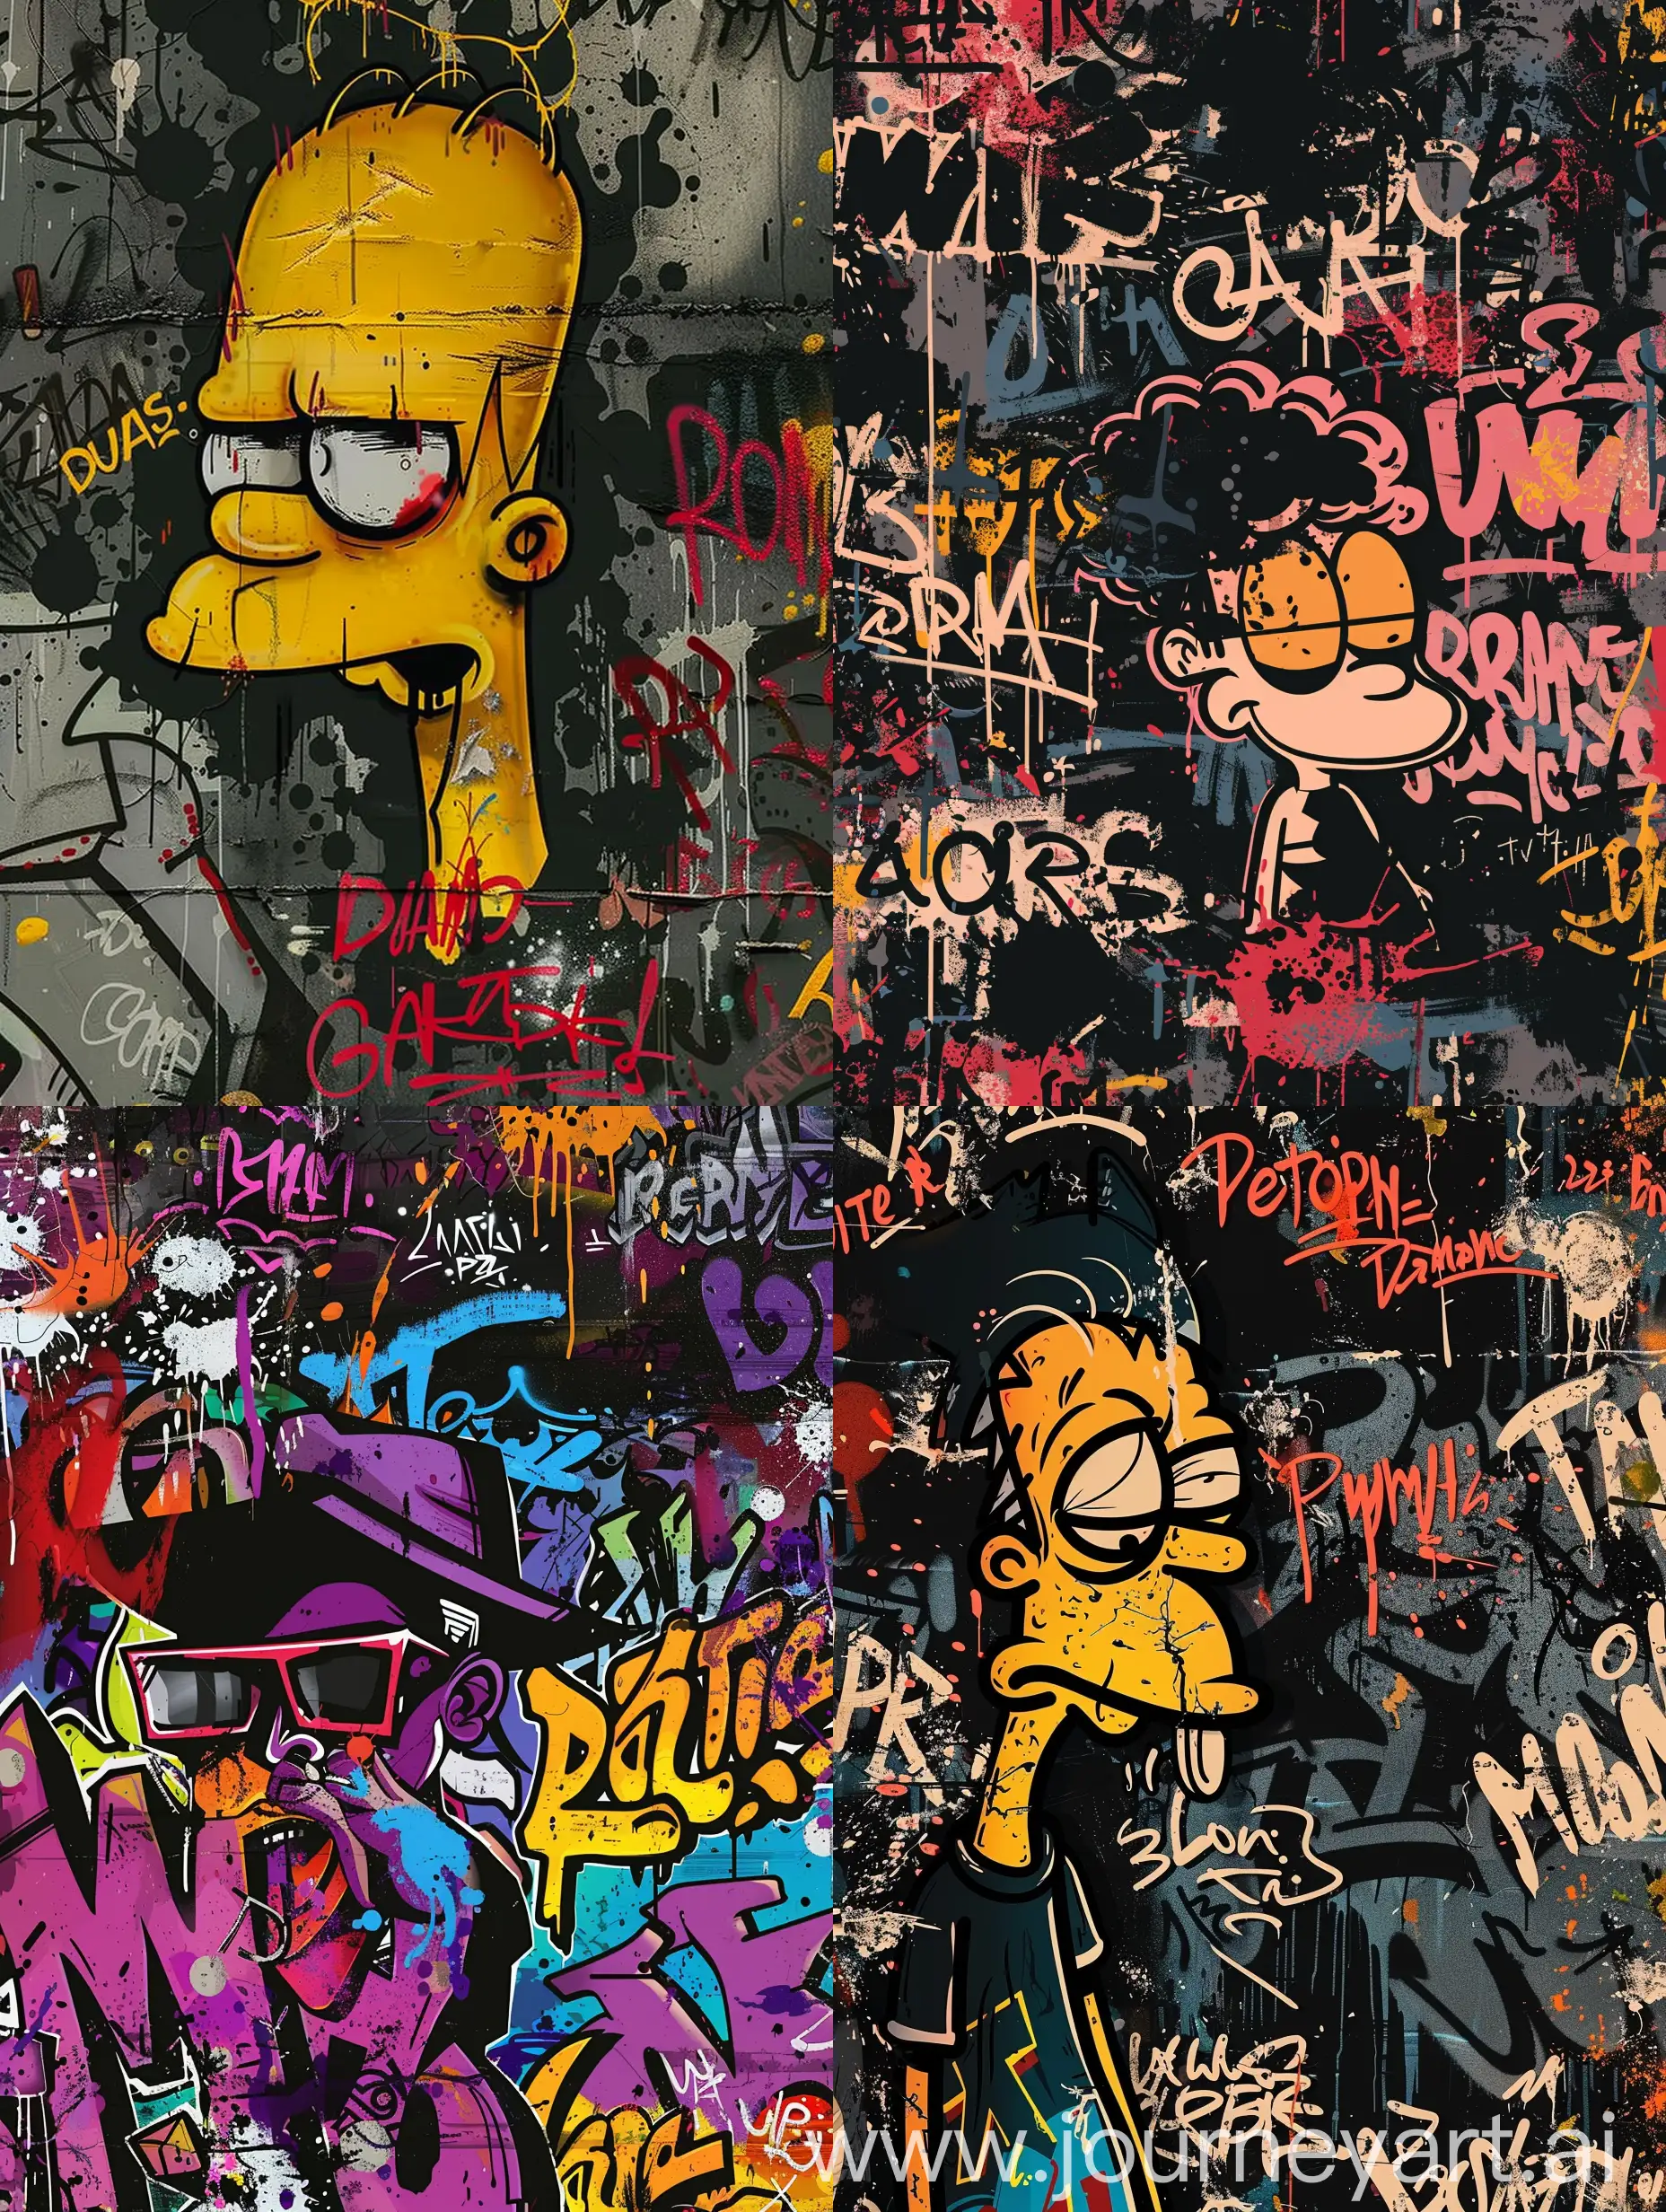 Urban-Graffiti-Art-Detailed-Illustration-of-Mafia-Petter-Griffin-in-a-Textured-Setting